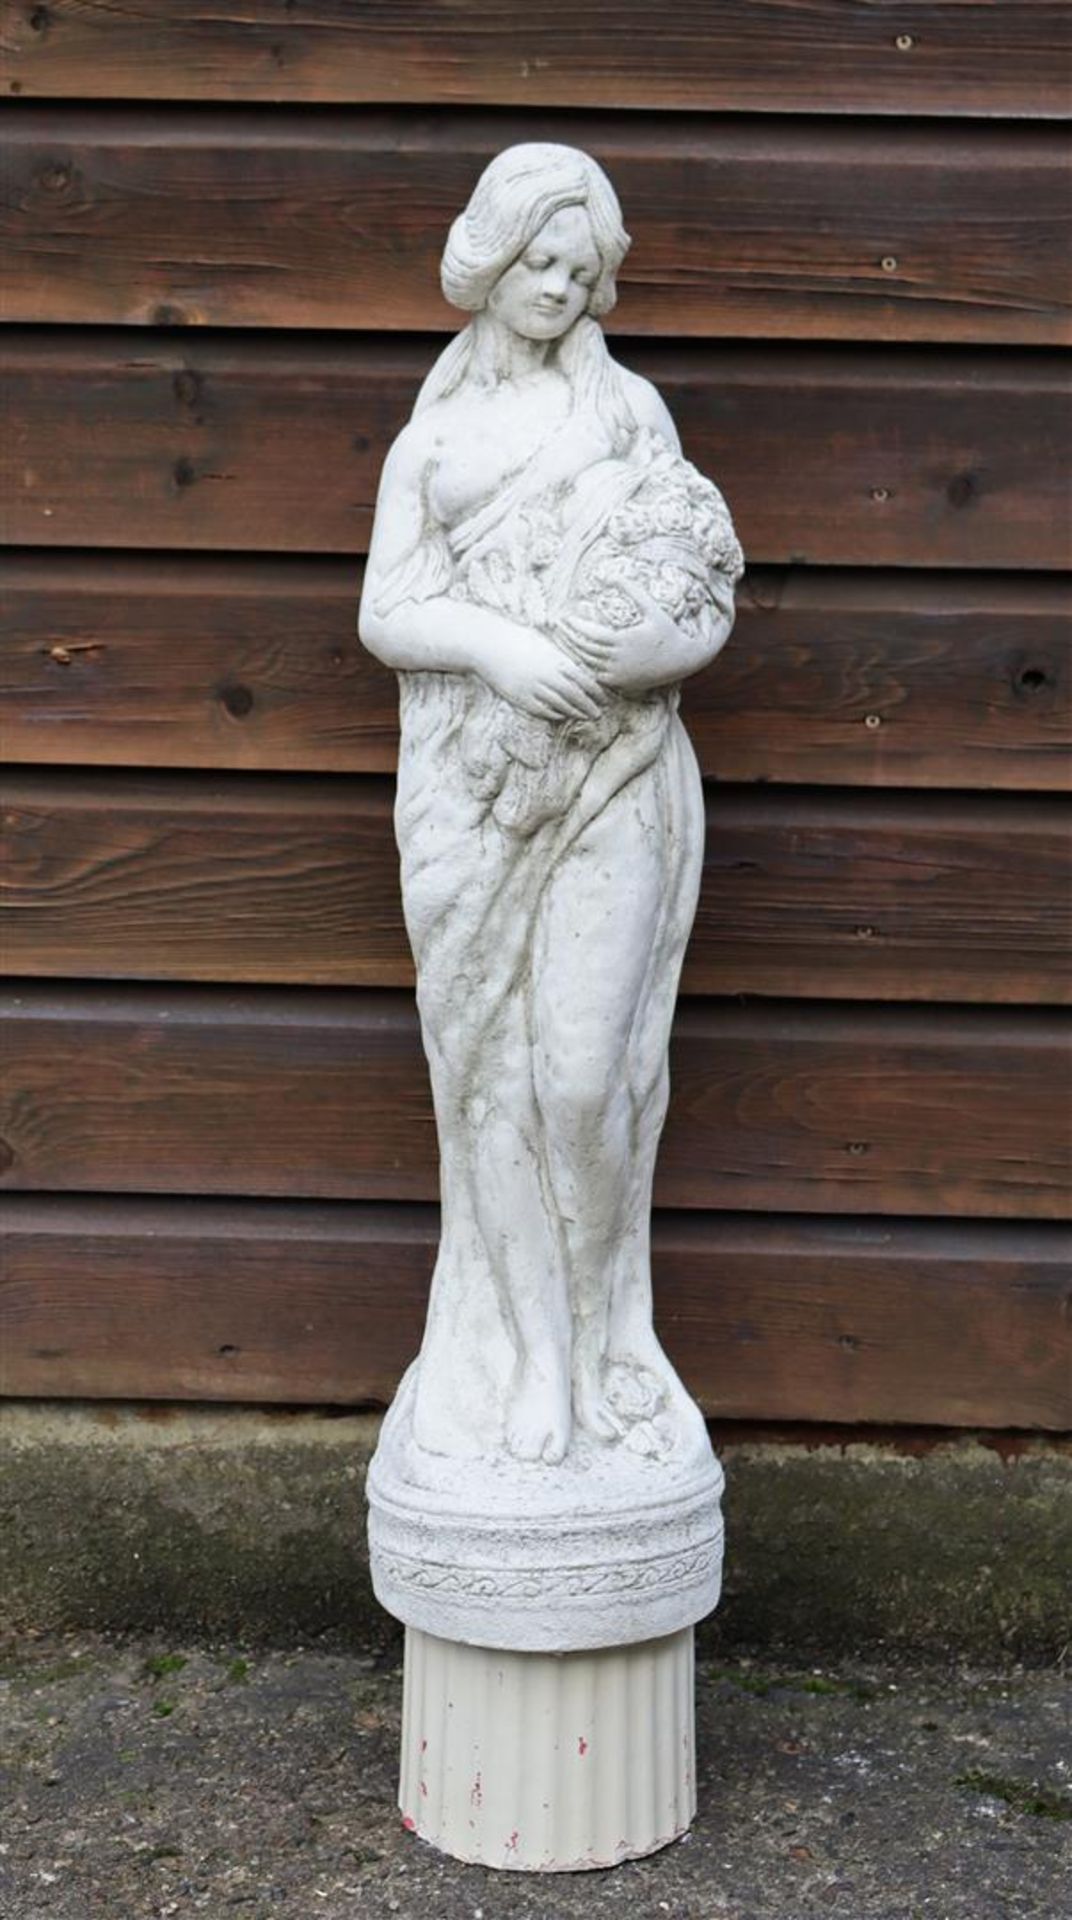 Concrete garden statue of woman